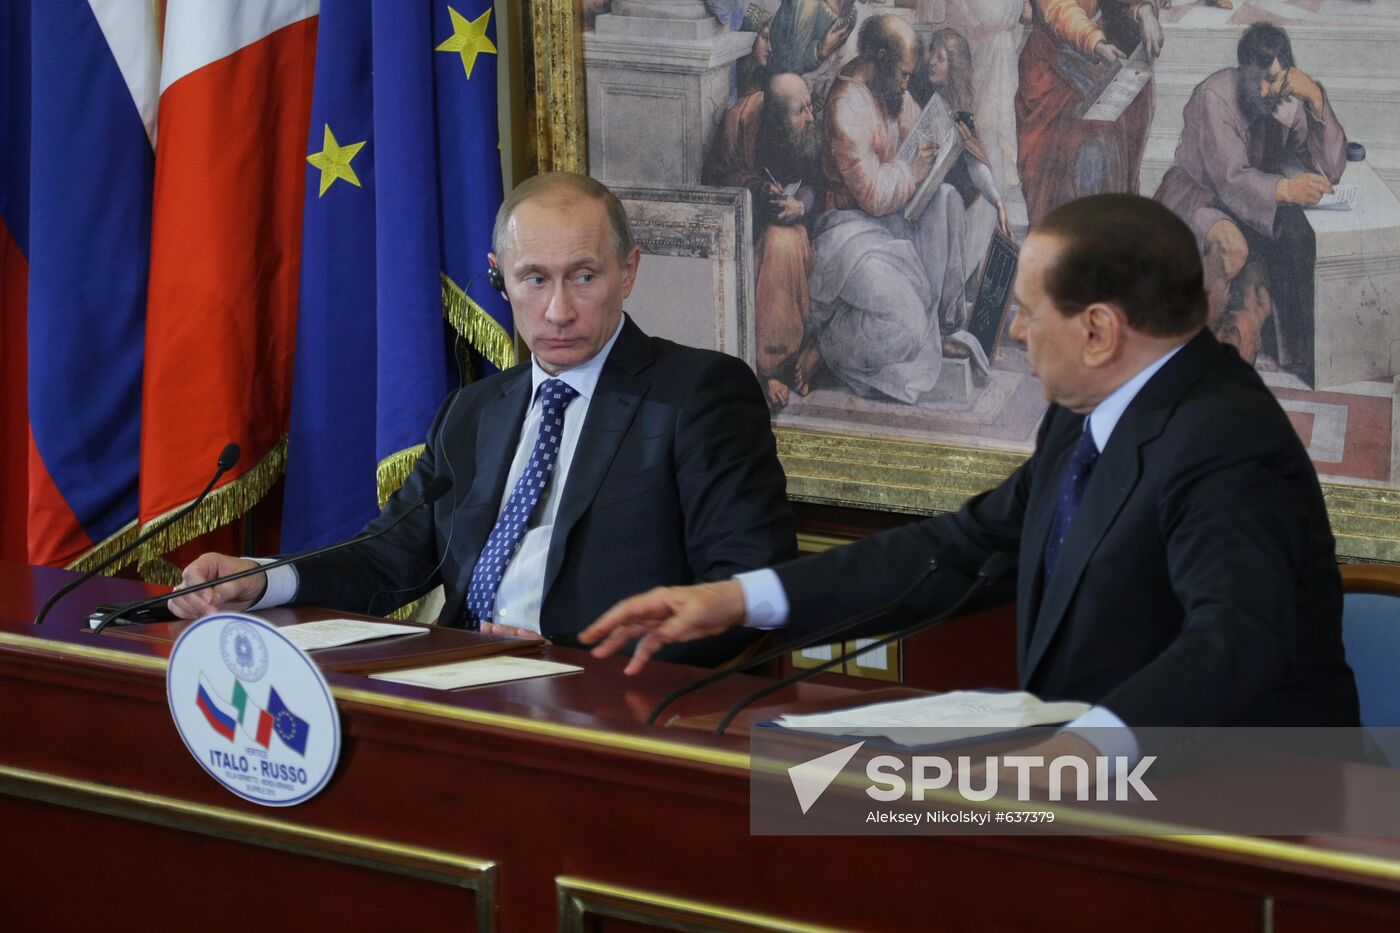 Press conference with Vladimir Putin and Silvio Berlusconi